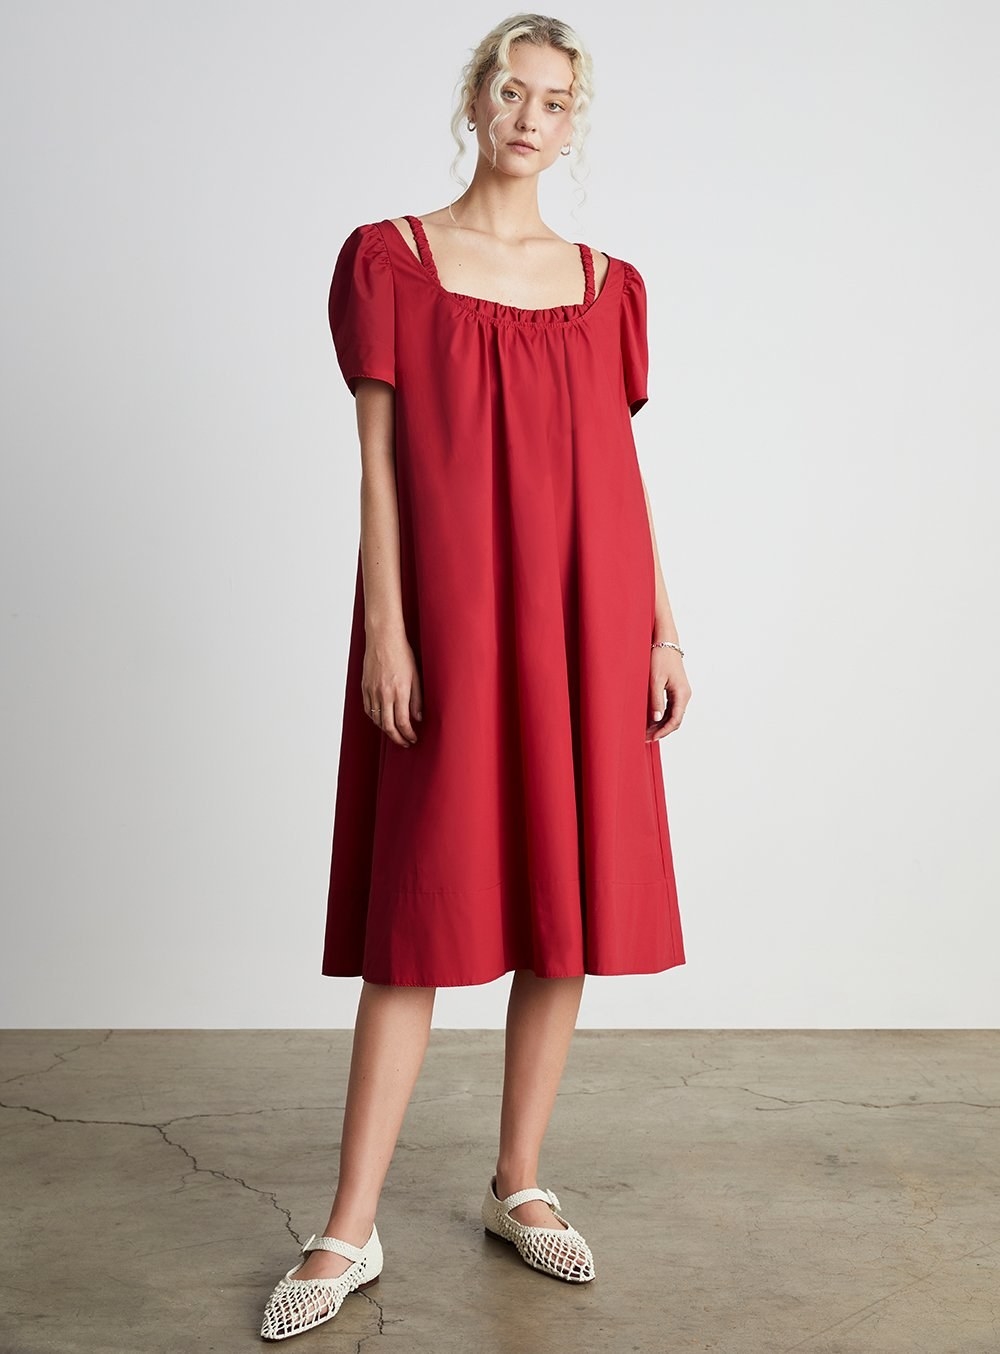 model wearing red smocked dress